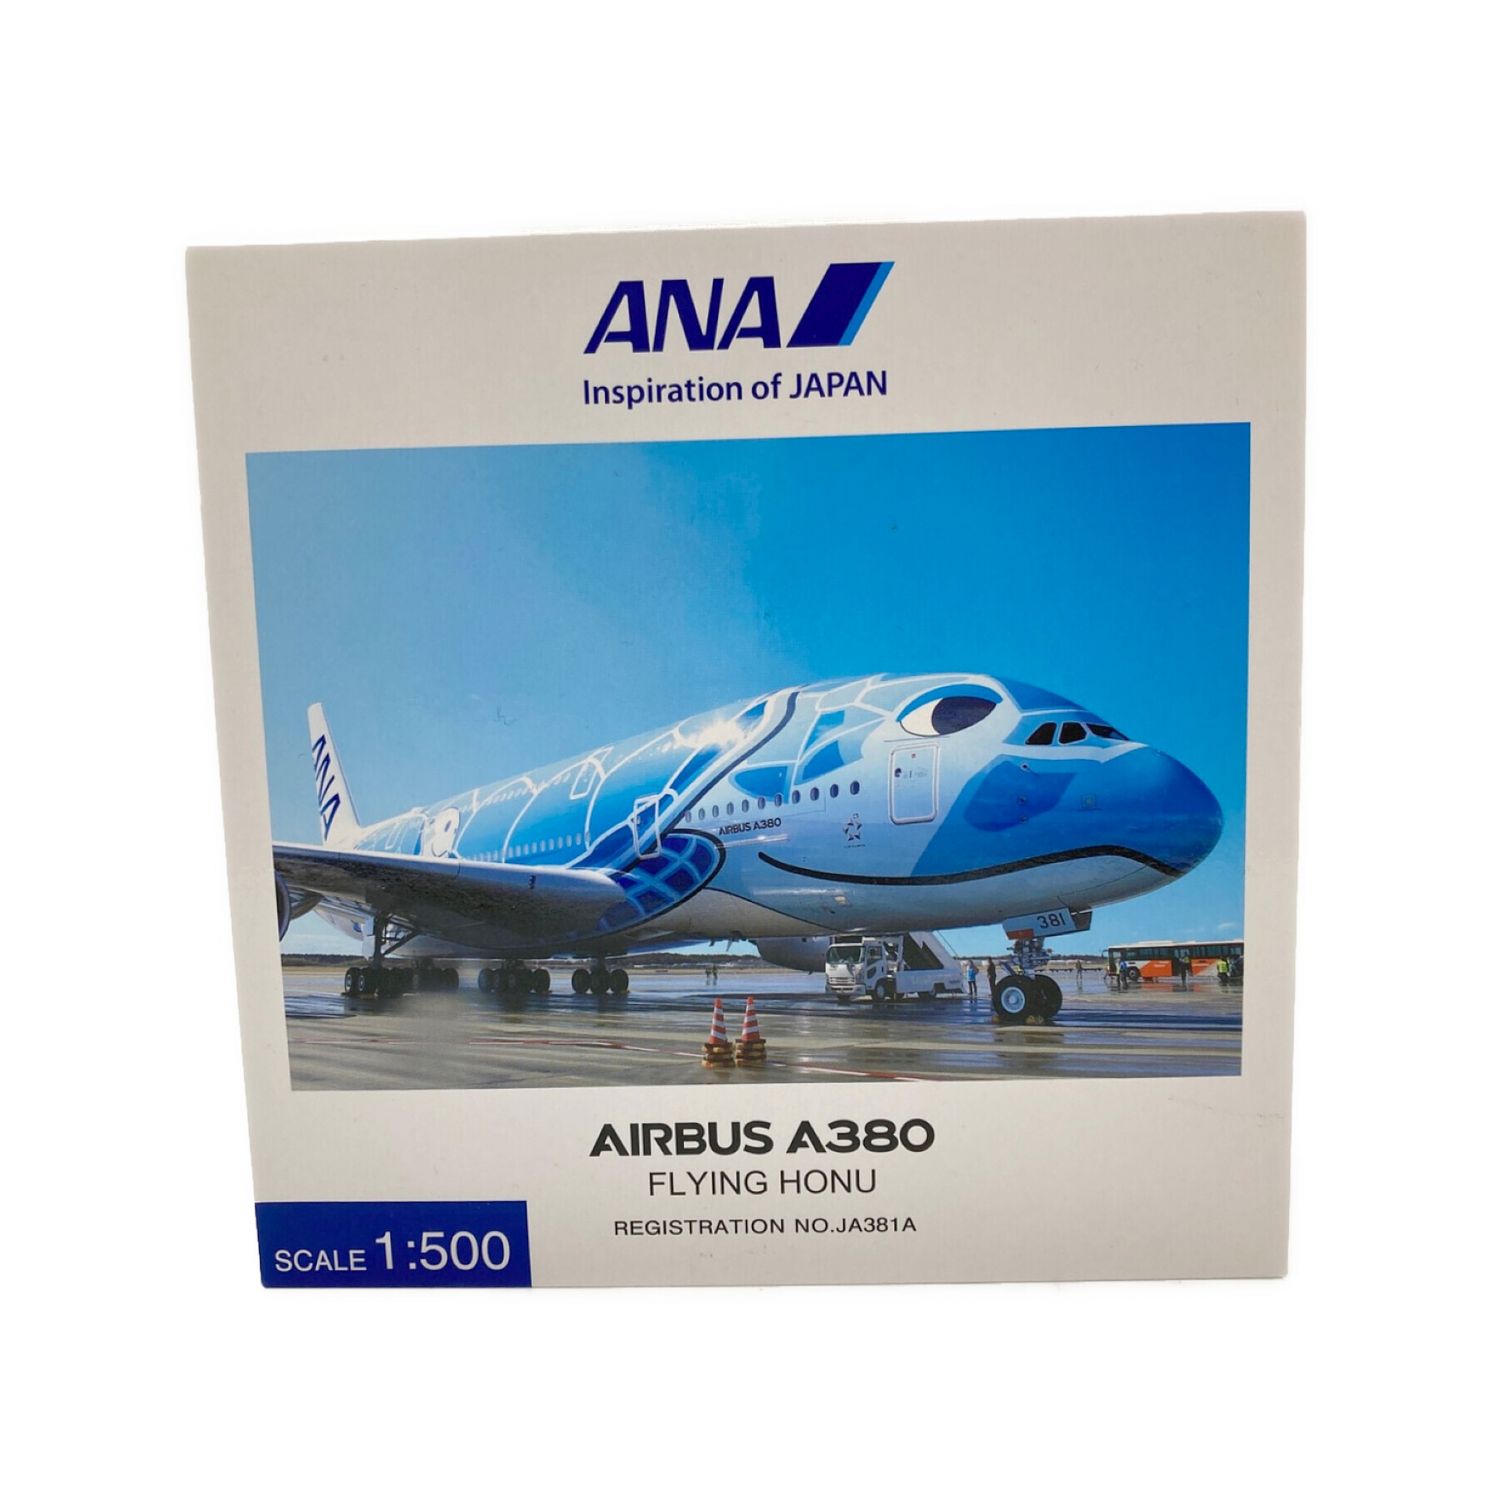 模型 1/500 A380-841 ANA FLYING HONU ANAブルー JA381A｜トレファクONLINE